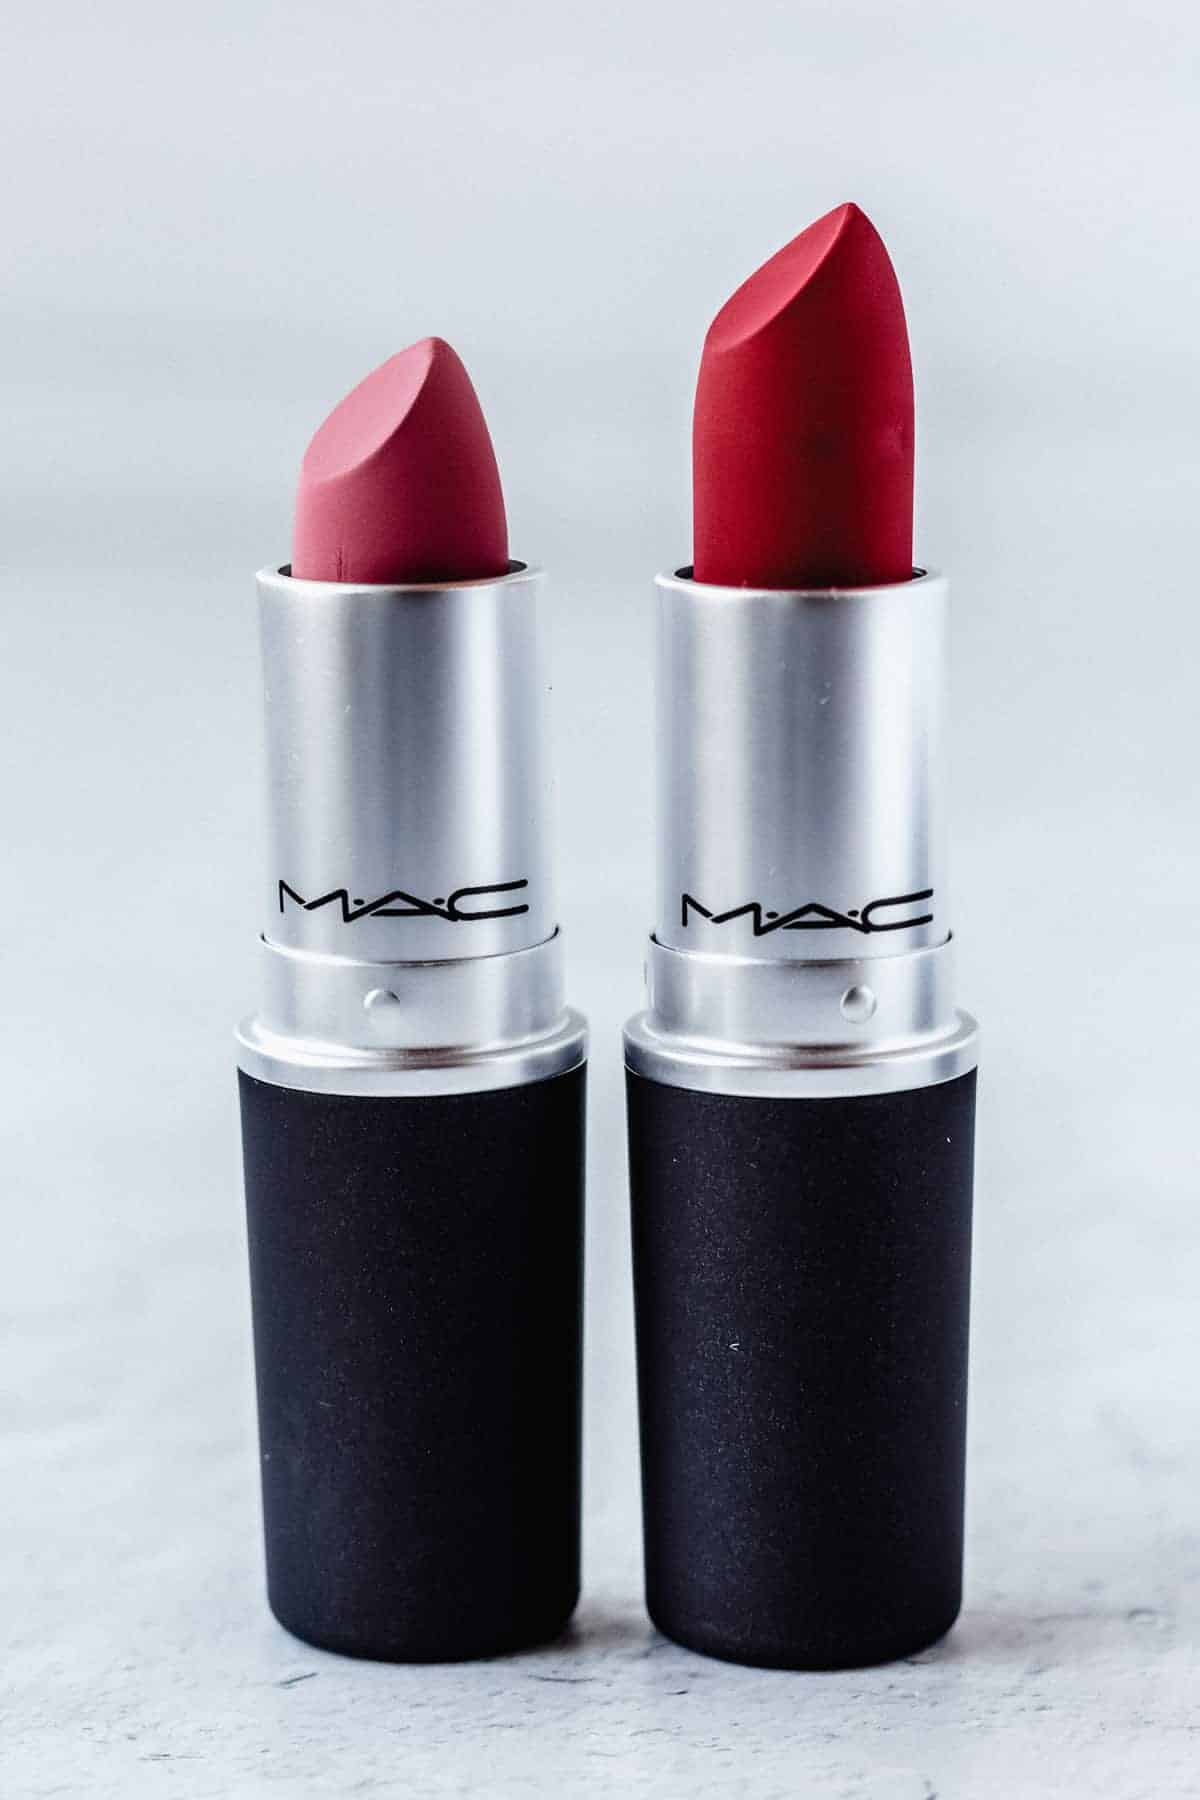 MAC Cosmetics Powder Kiss Lipstick Duo in werk, werk, werk and reverence opened with a white background